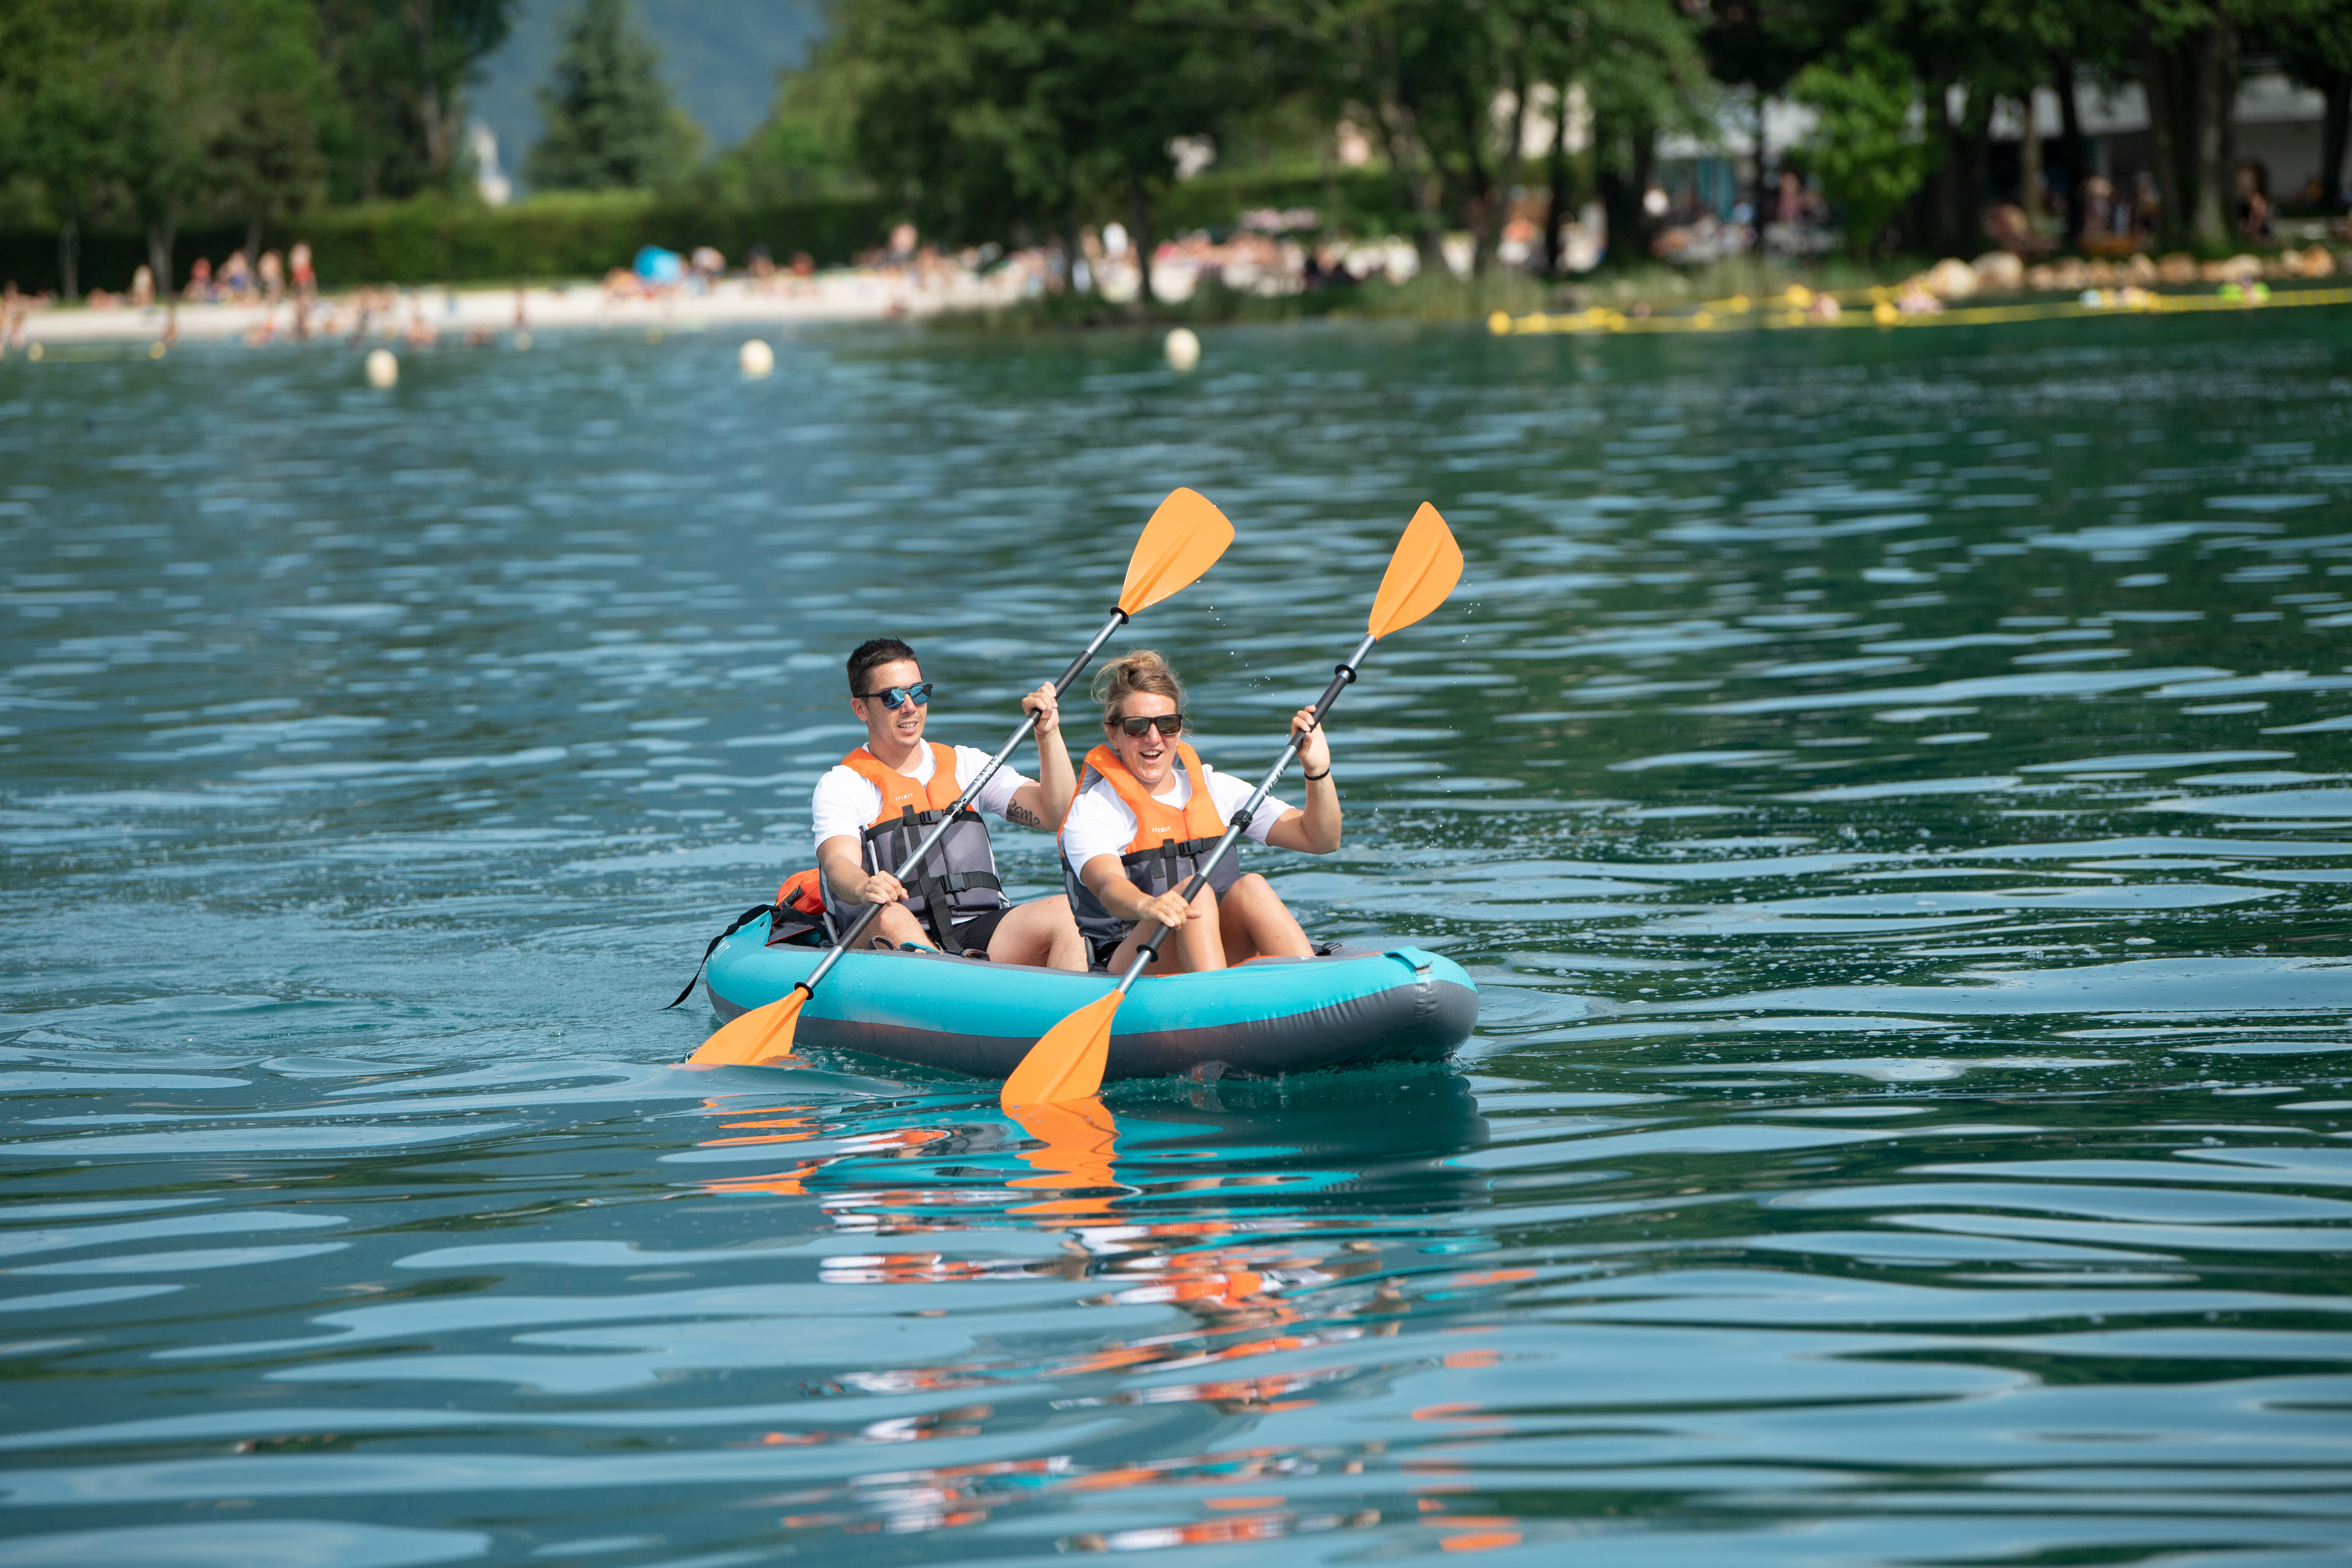 Kayak gonflable 3 places - X 100+ bleu/gris - ITIWIT